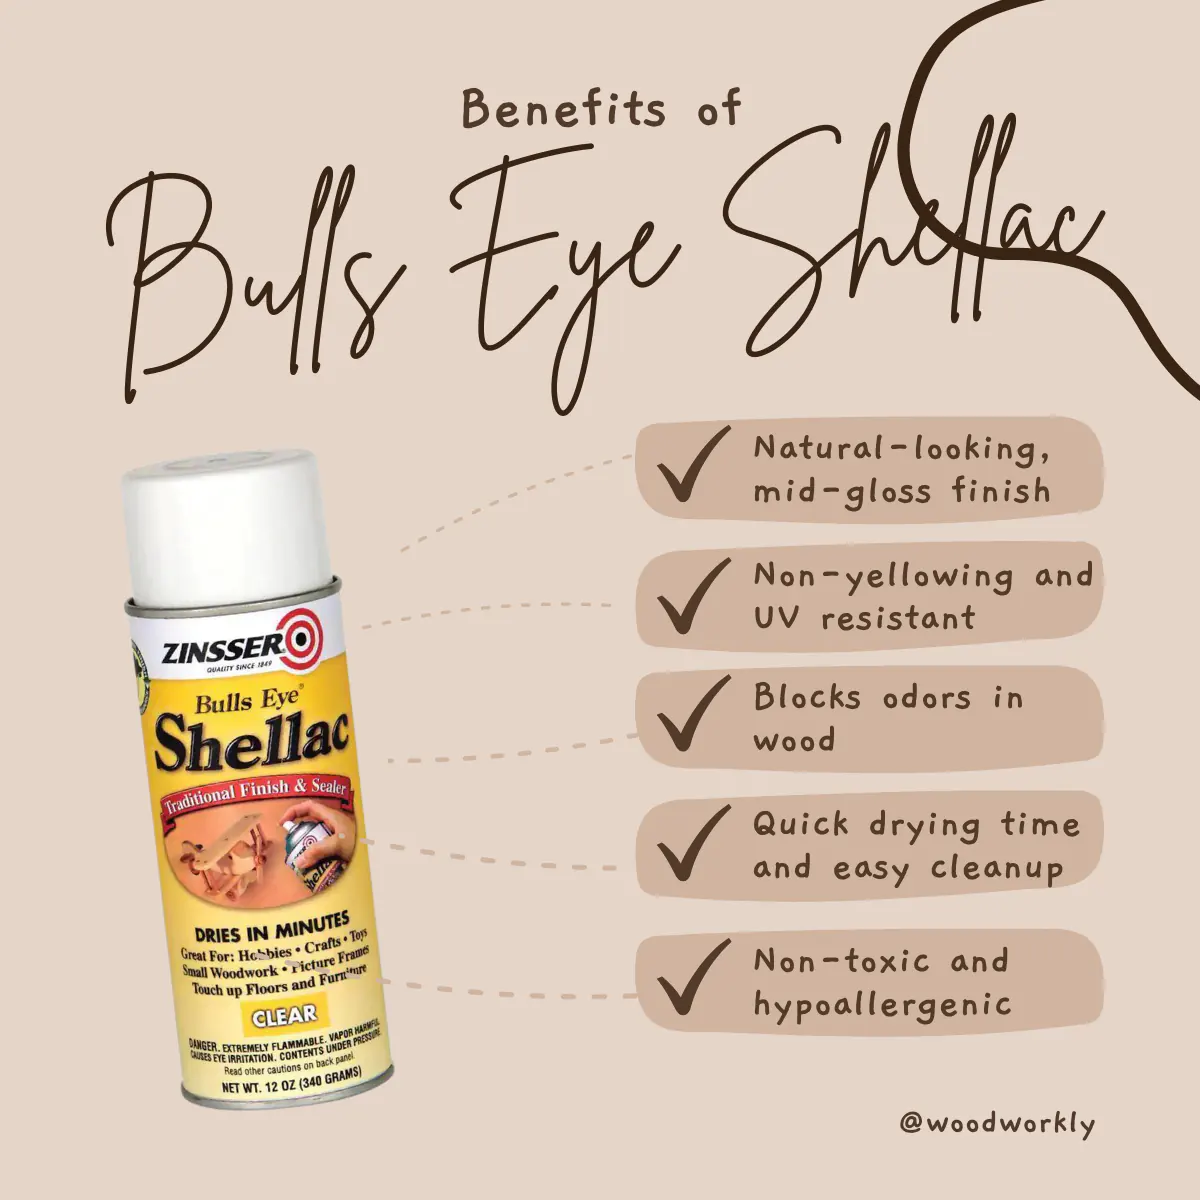 Benefits of Bulls Eye Shellac